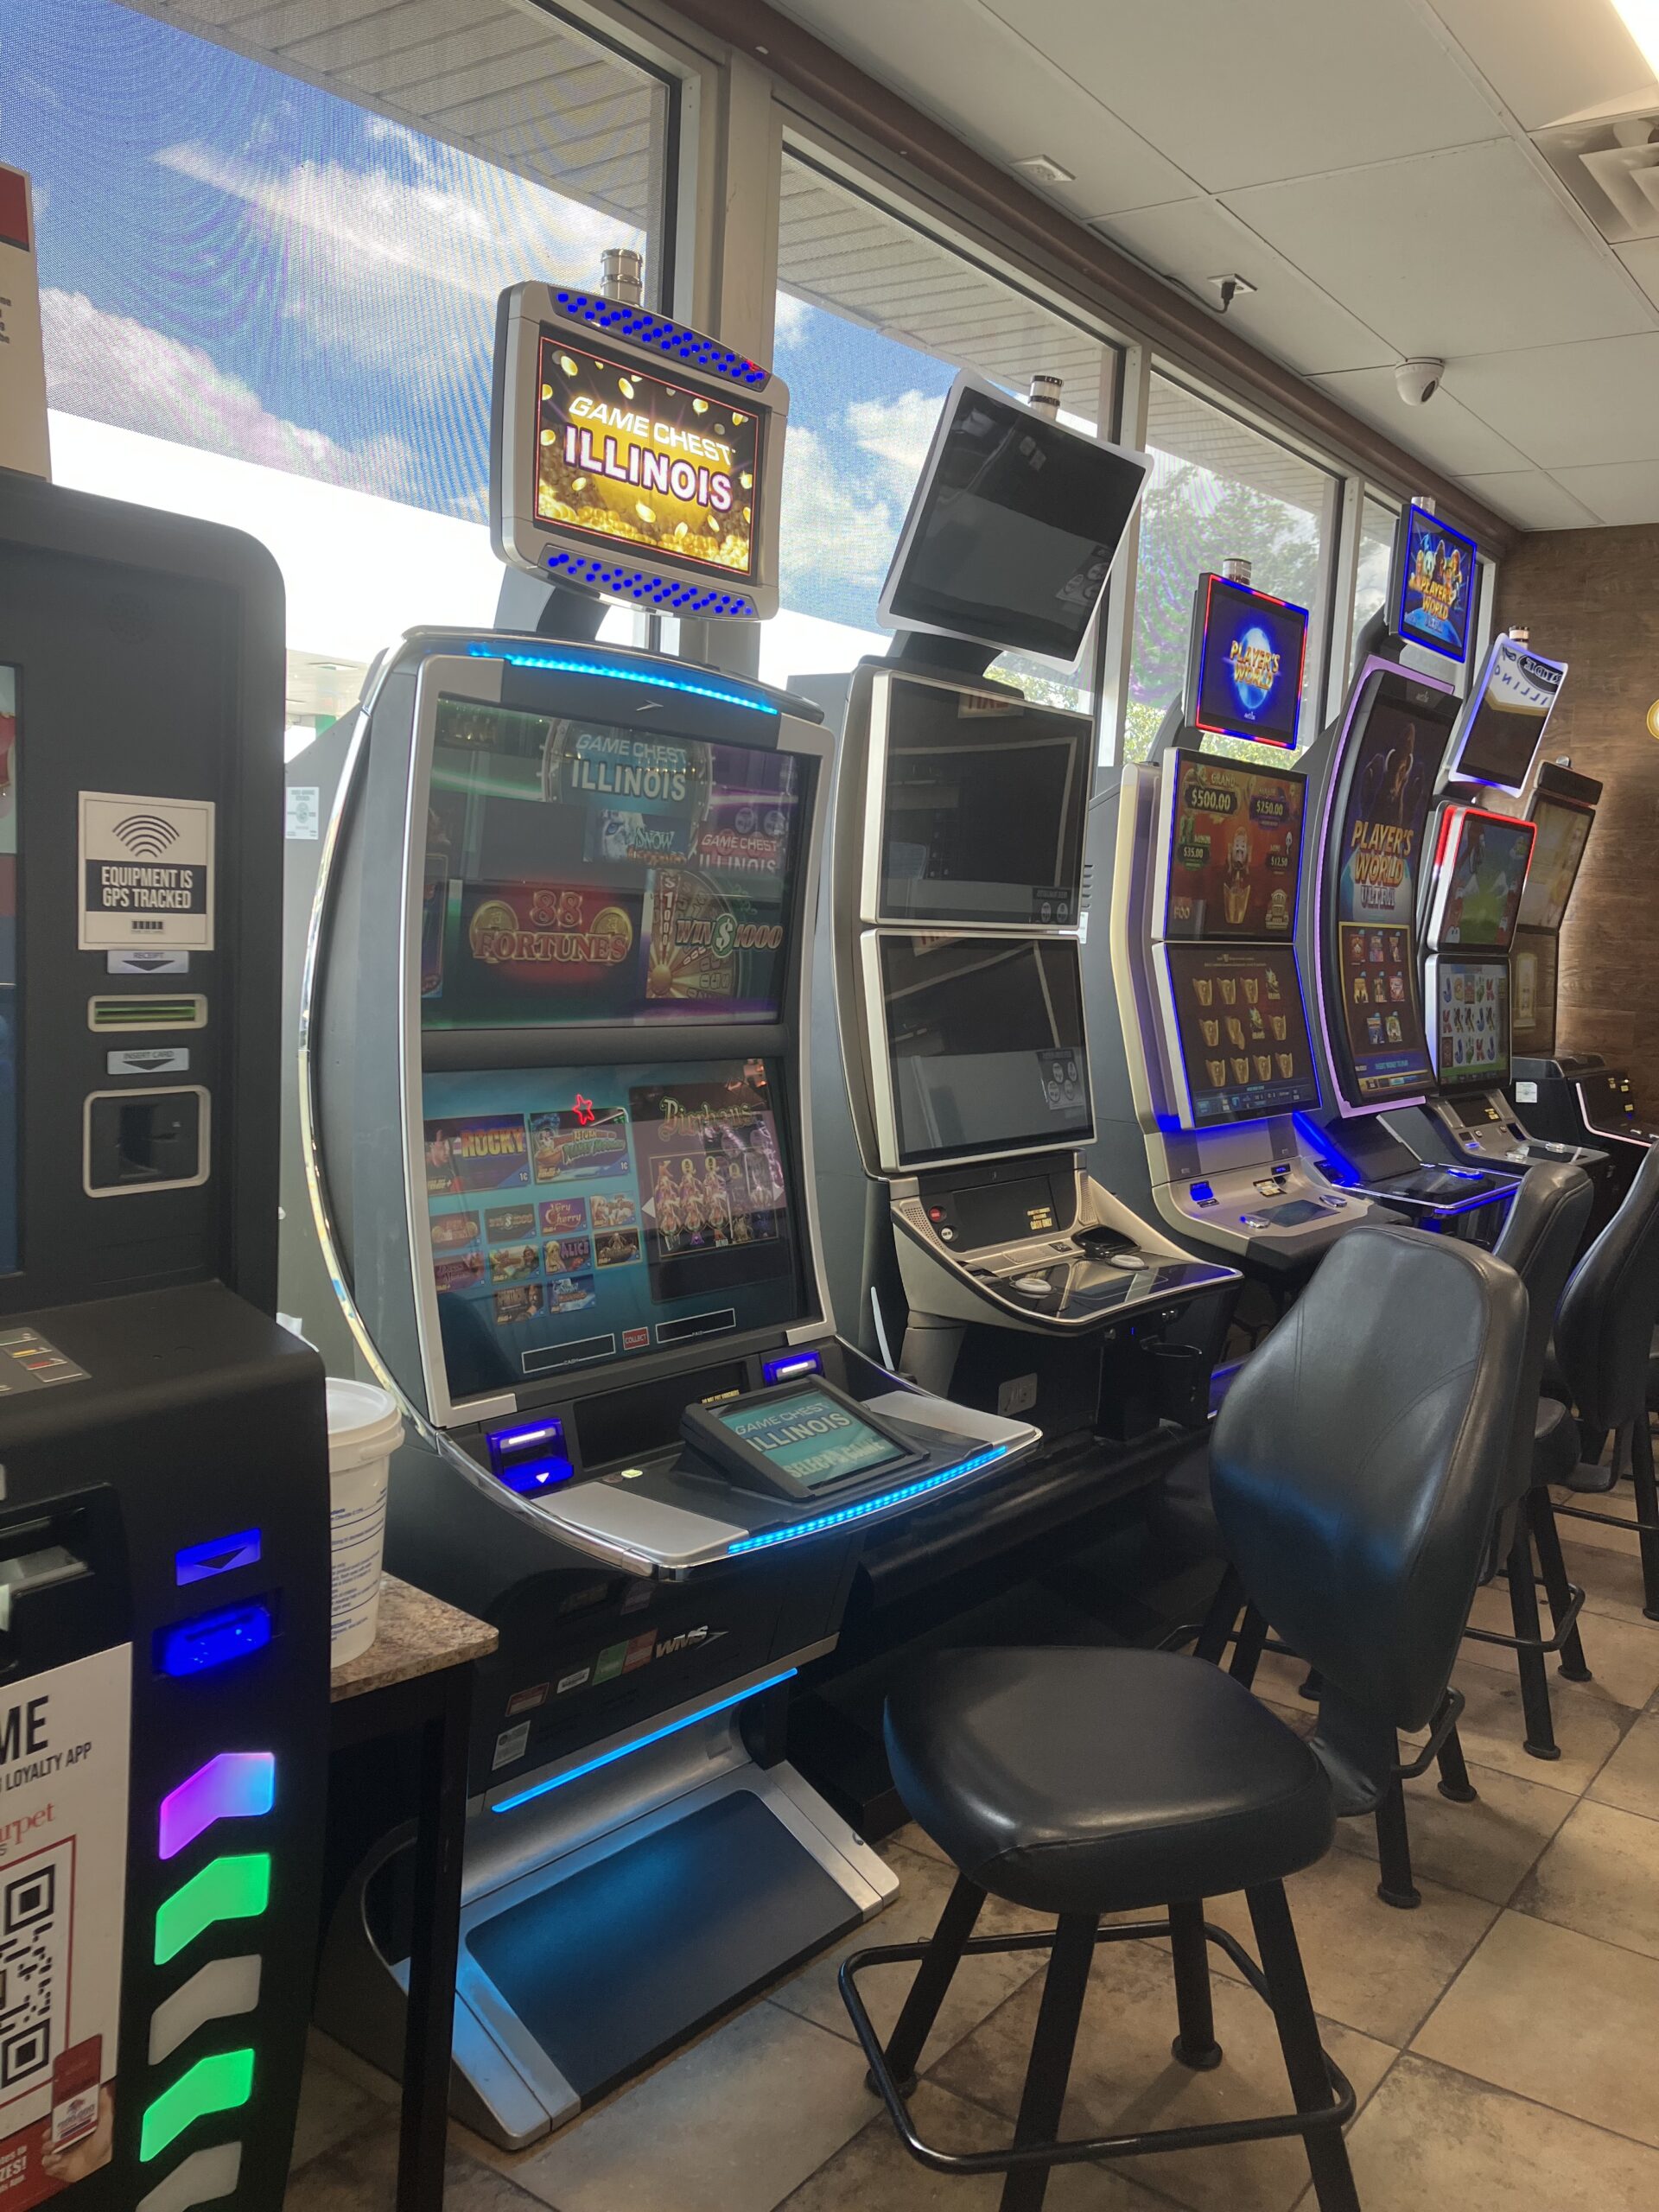 Video gambling proposal heading to City Council